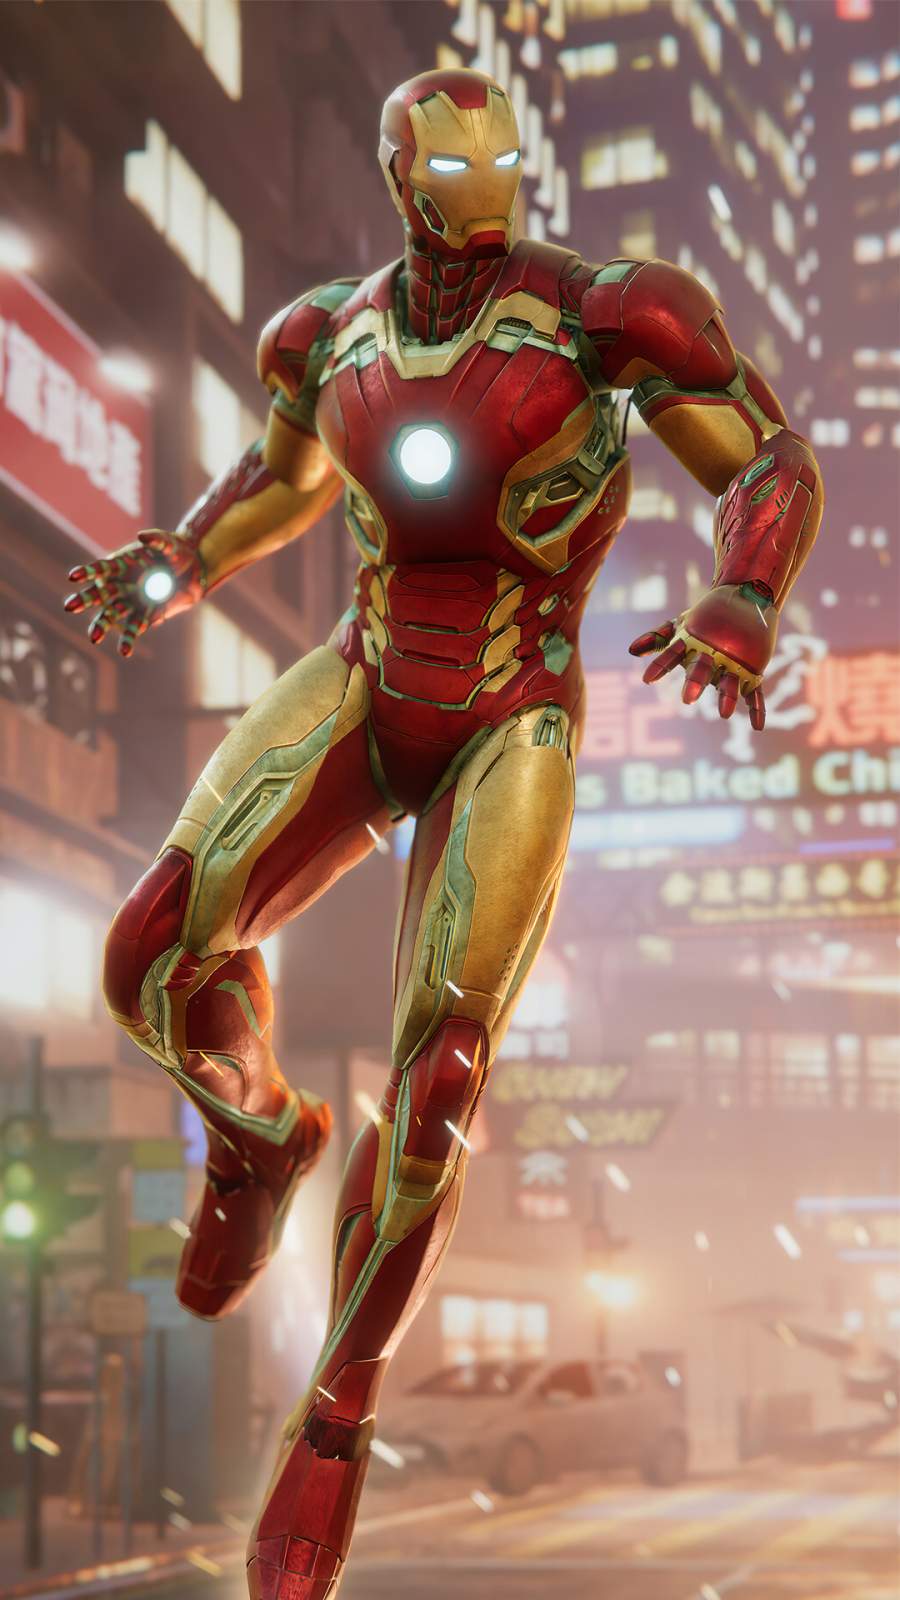 Iron Man Suit 4K iPhone Wallpaper - iPhone Wallpapers : iPhone Wallpapers